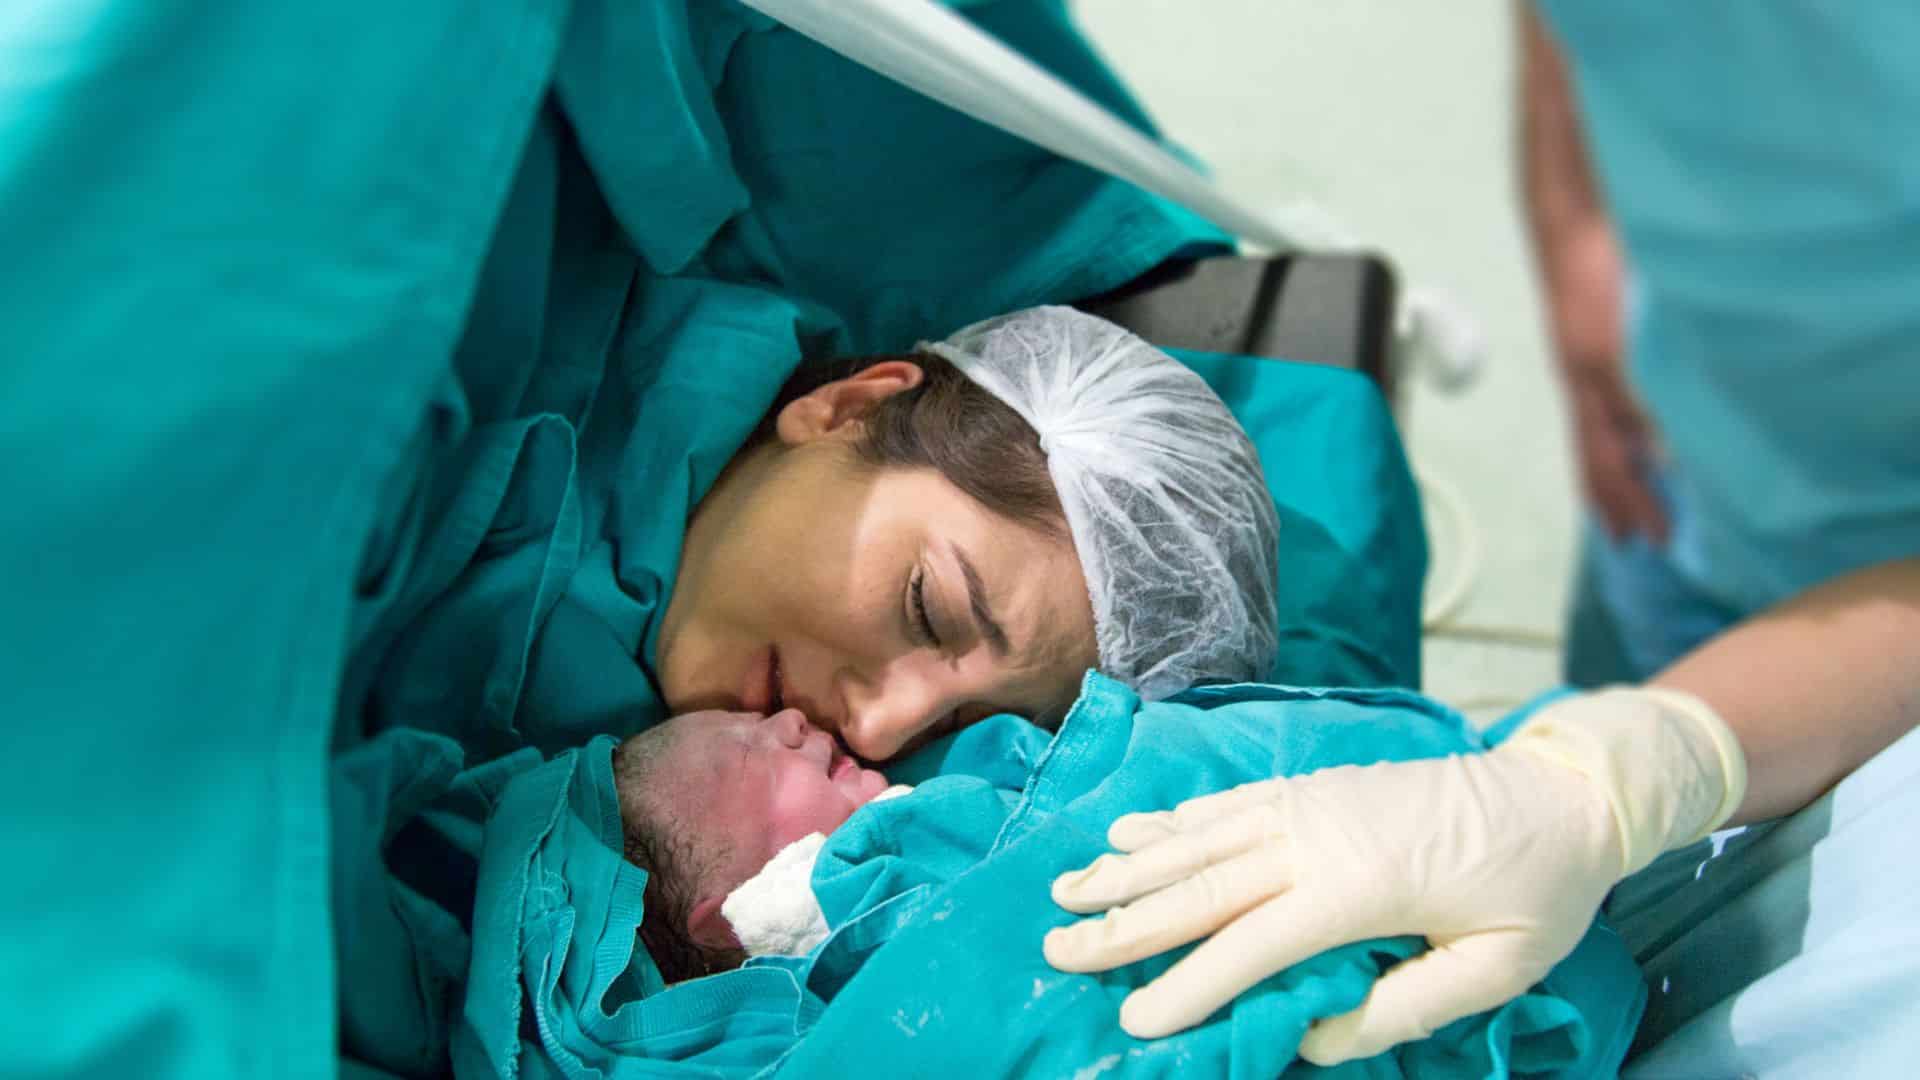 C-Section Procedure: What Happens During a Cesarean Delivery?